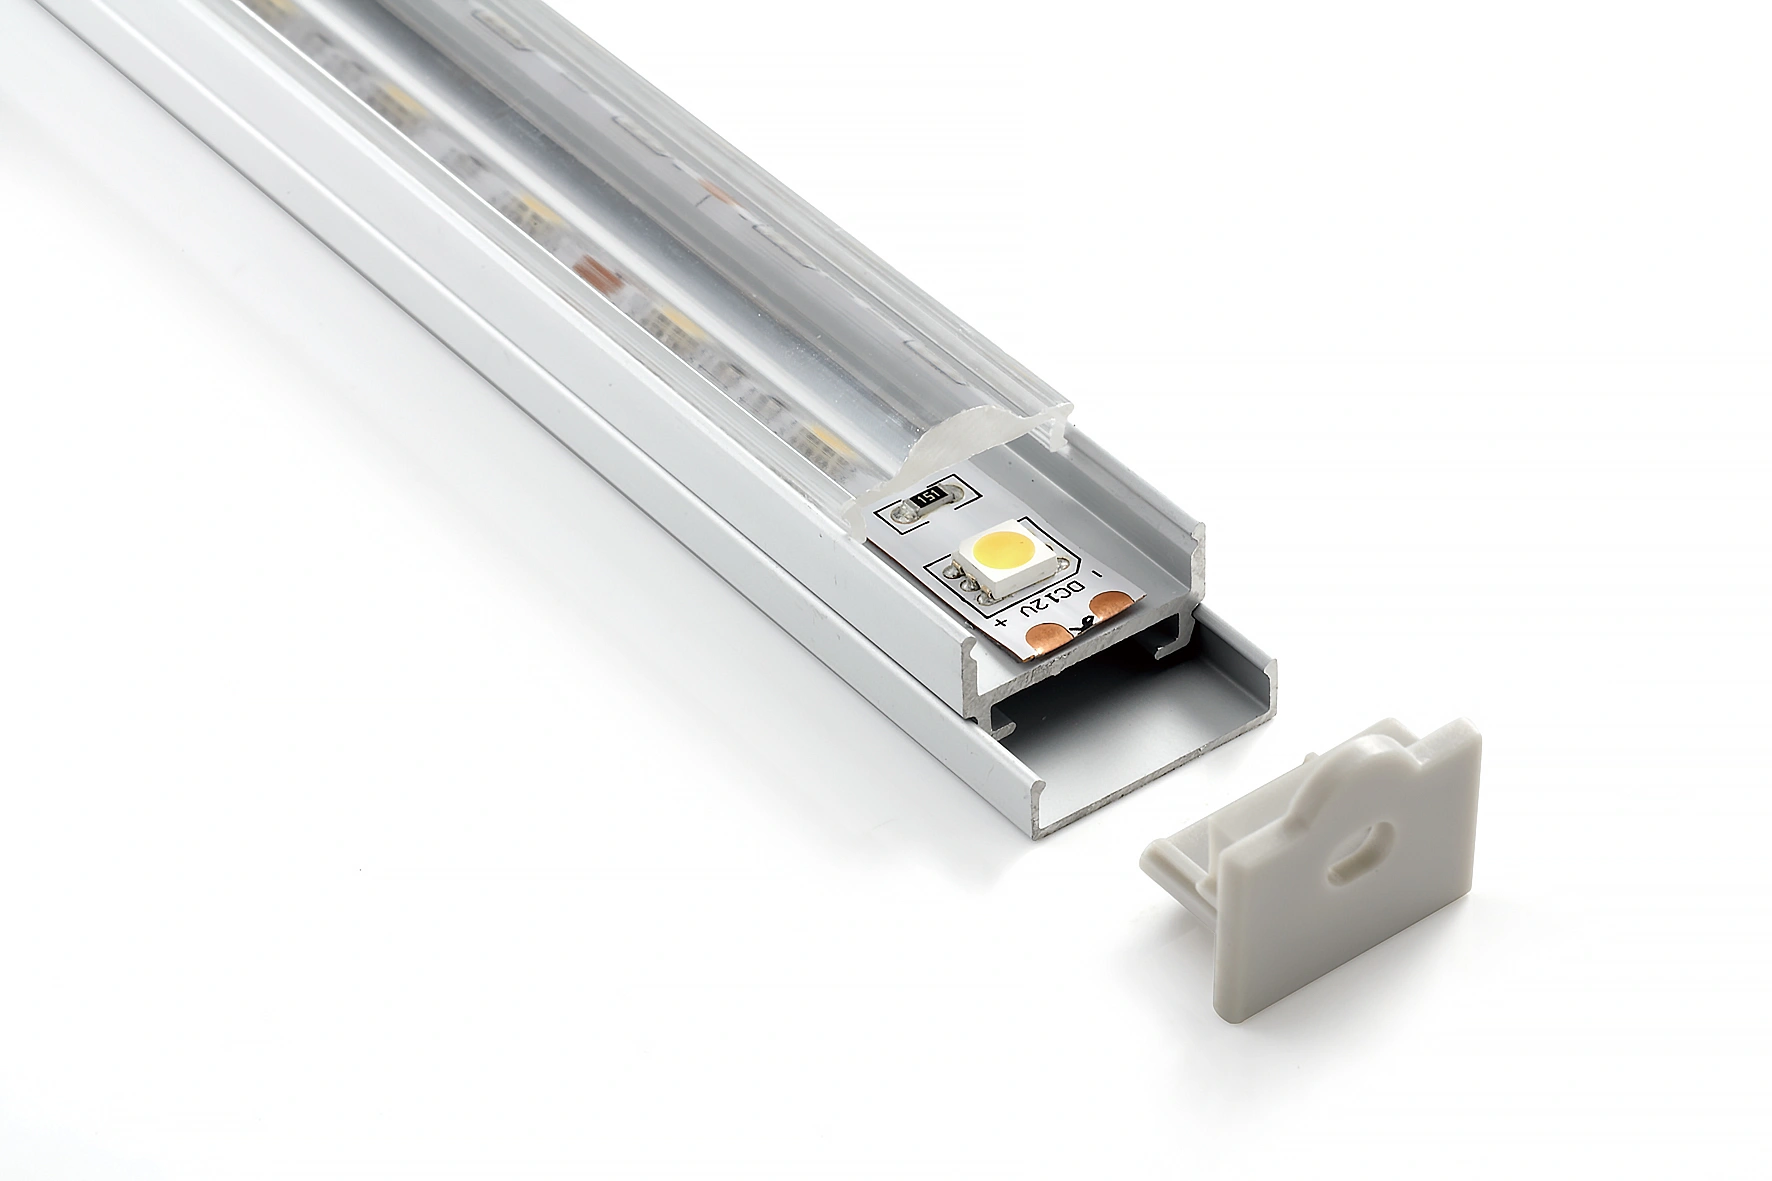 LED Profile Aluminum YF-ALP012